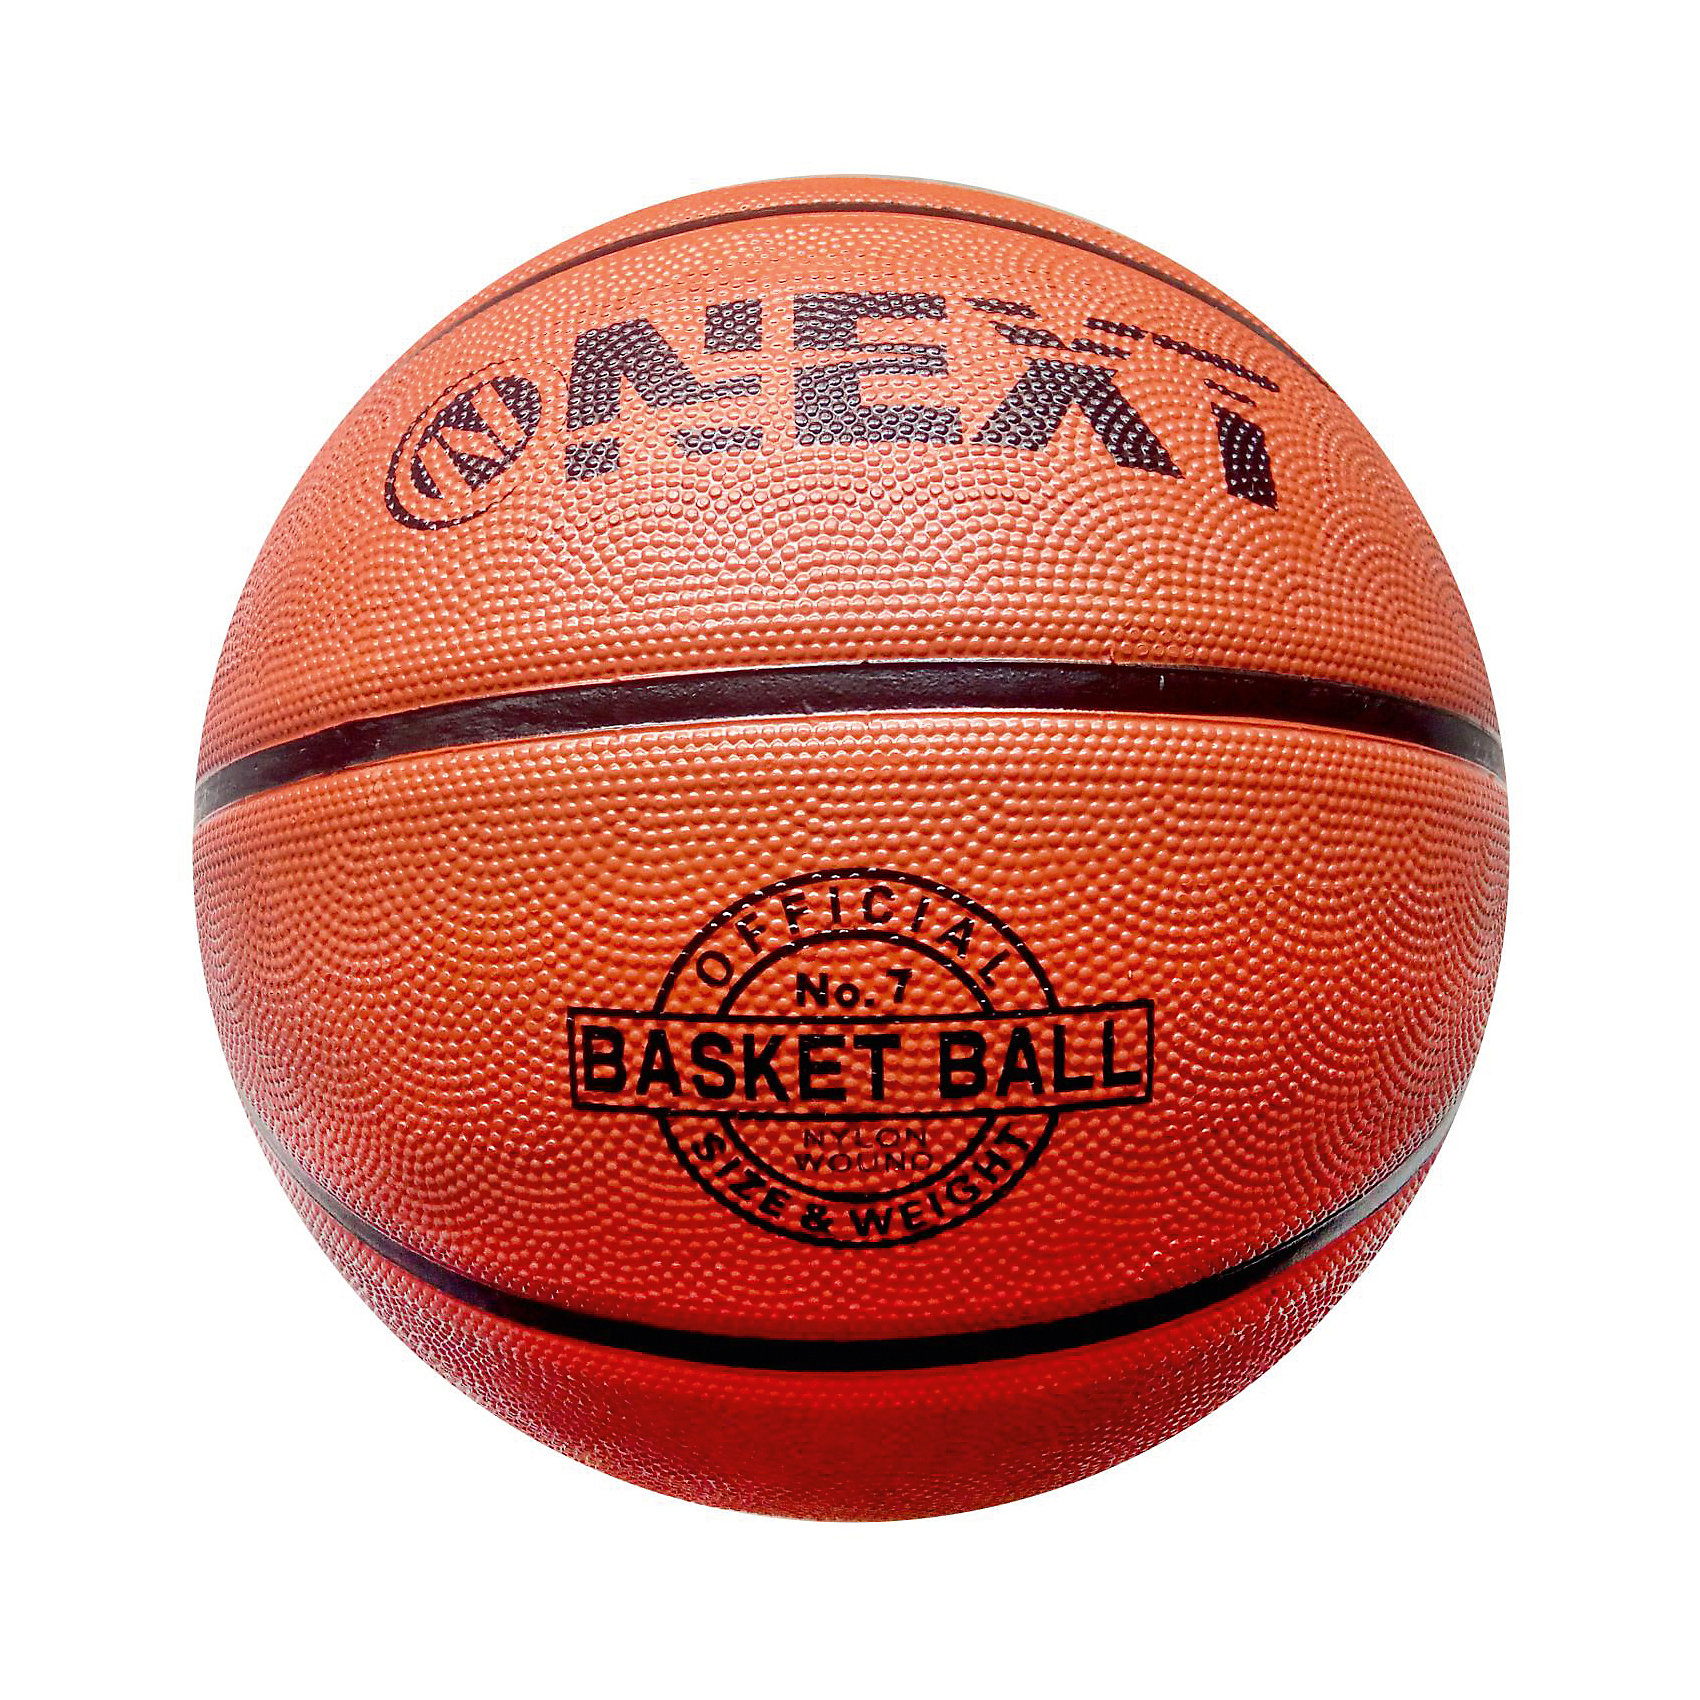 Мяч баскетбольный фото: D0 b1 d0 b0 d1 81 d0 ba d0 b5 d1 82 d0 b1 d0 be .